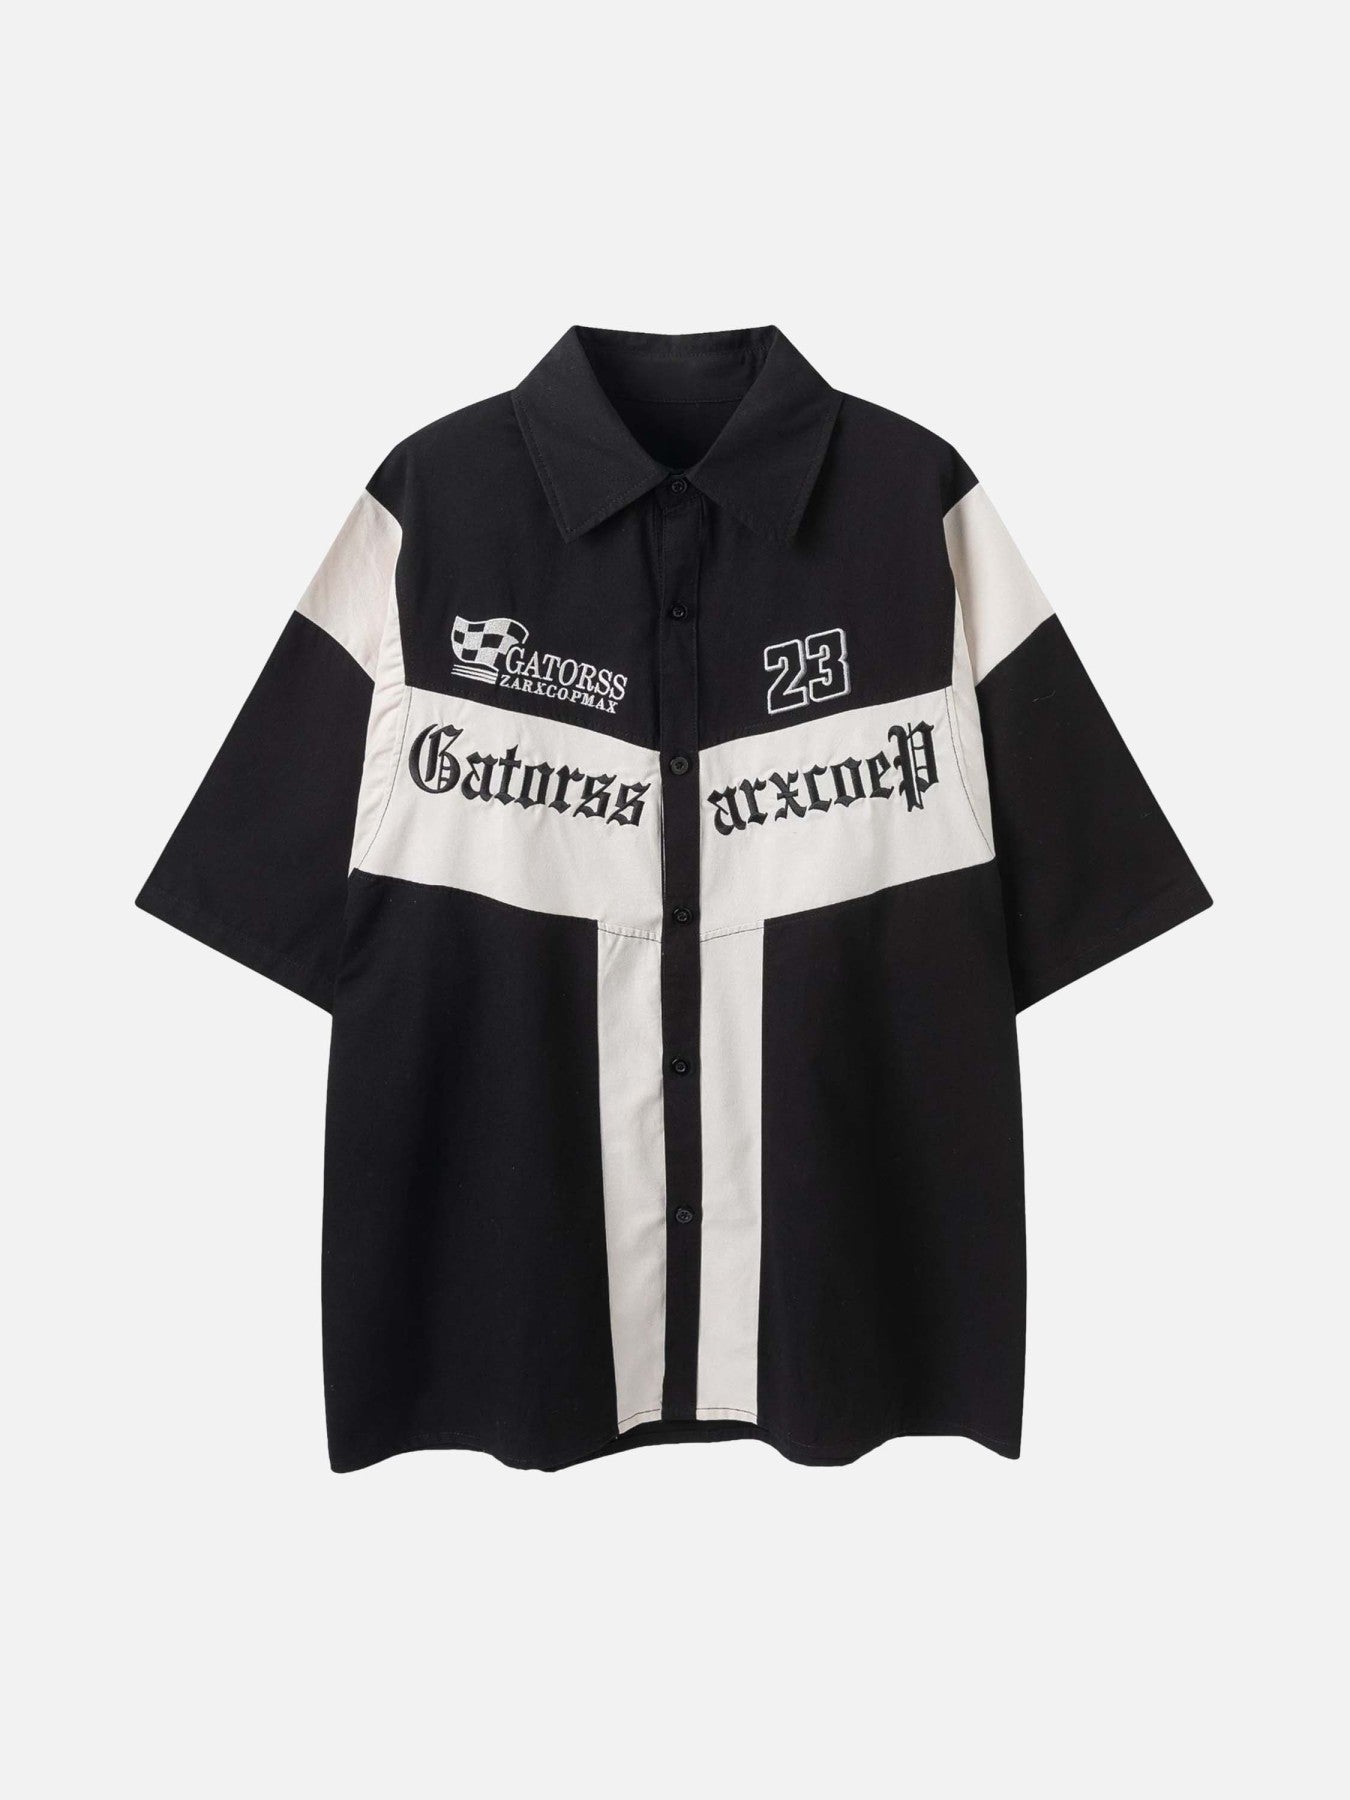 Thesupermade American Vintage Design Short-sleeved Shirt - 1624